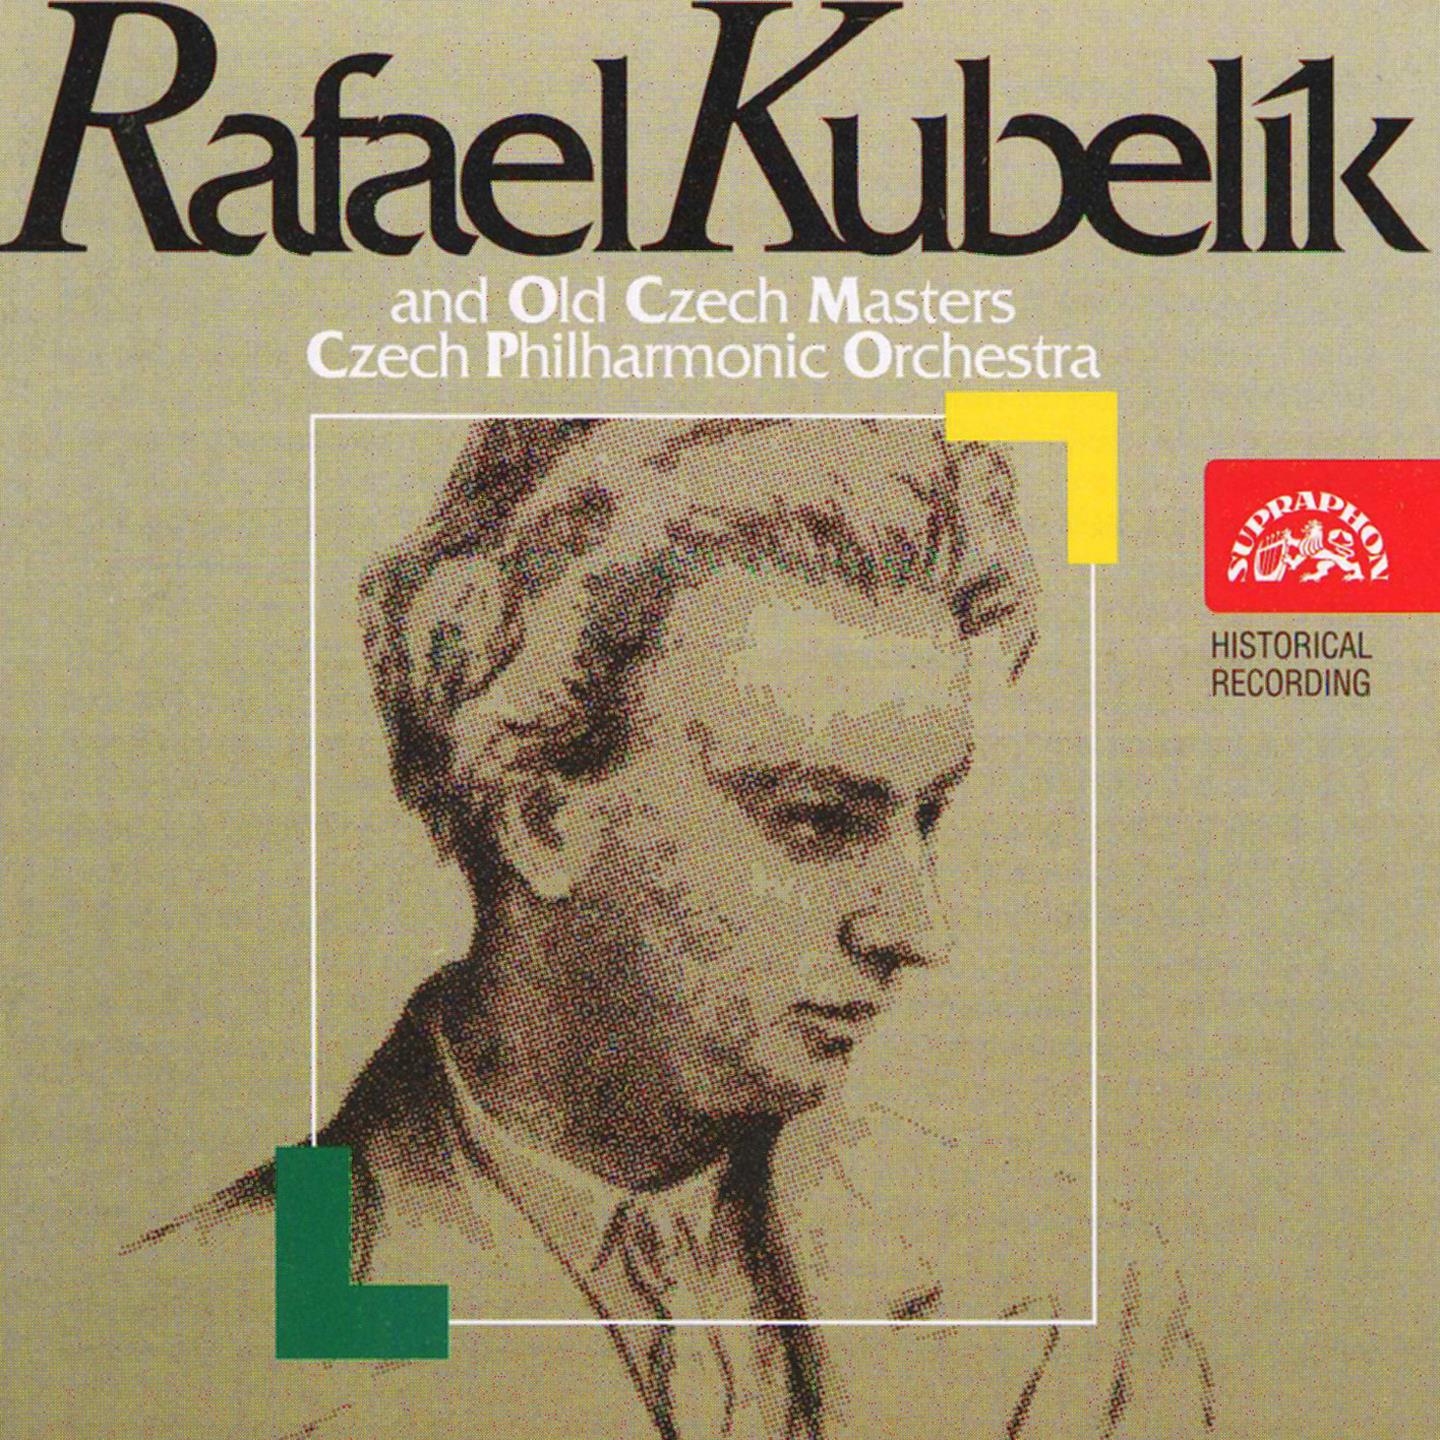 Rafael Kubeli k and Old Czech Masters